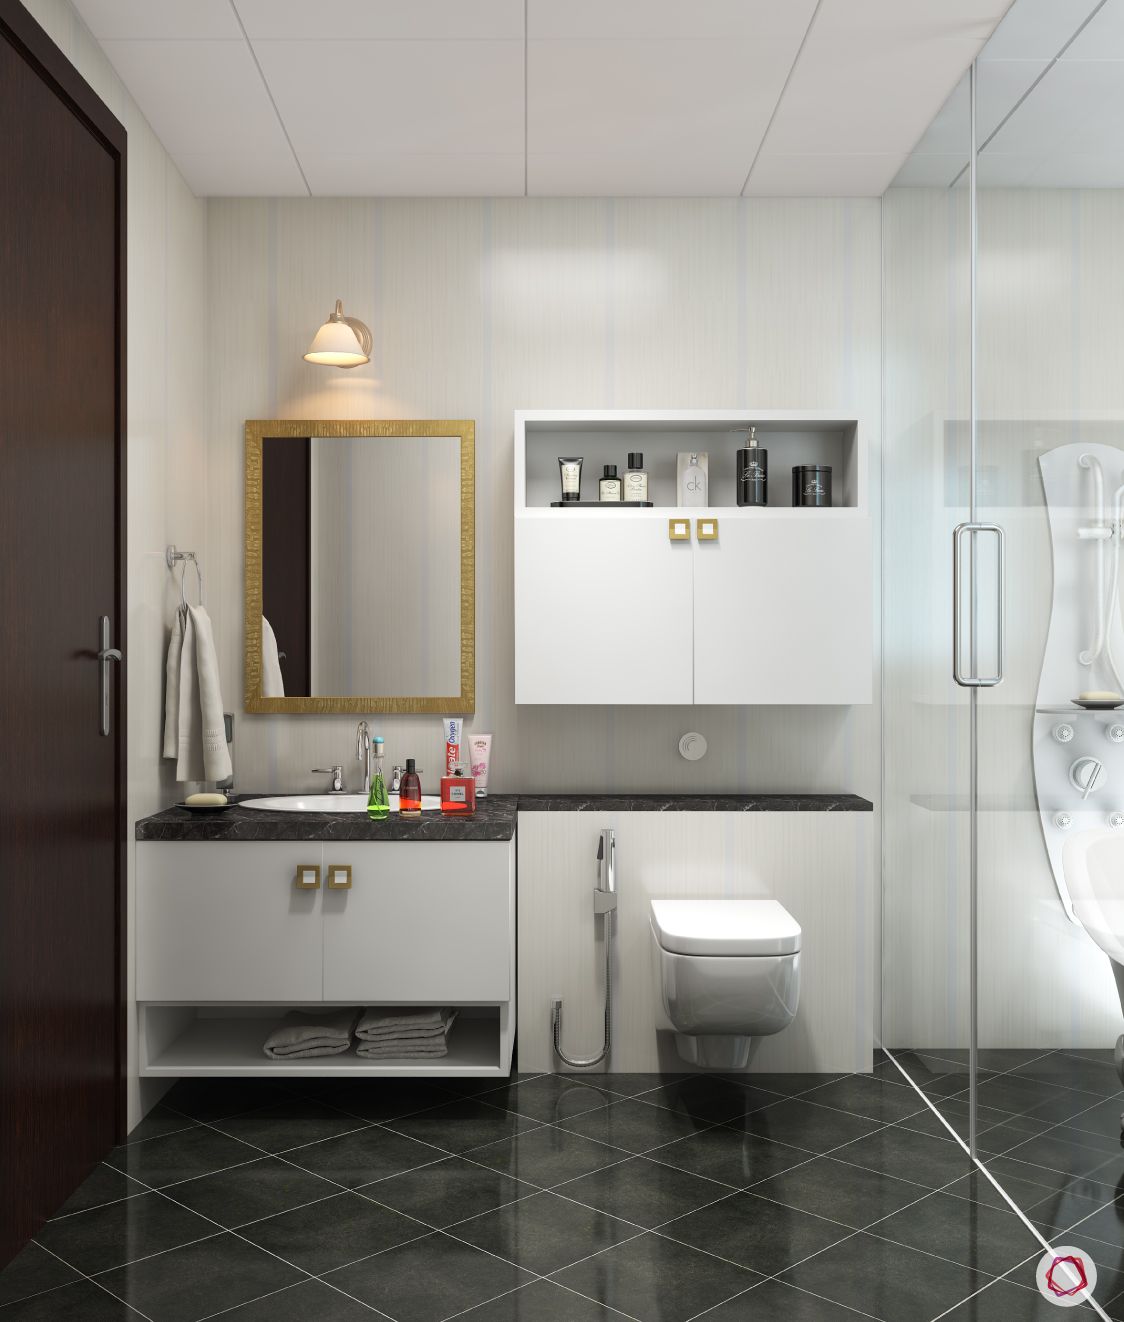 rectangle-mirror-light-storage-cabinet-sink-black-countertop-toilet